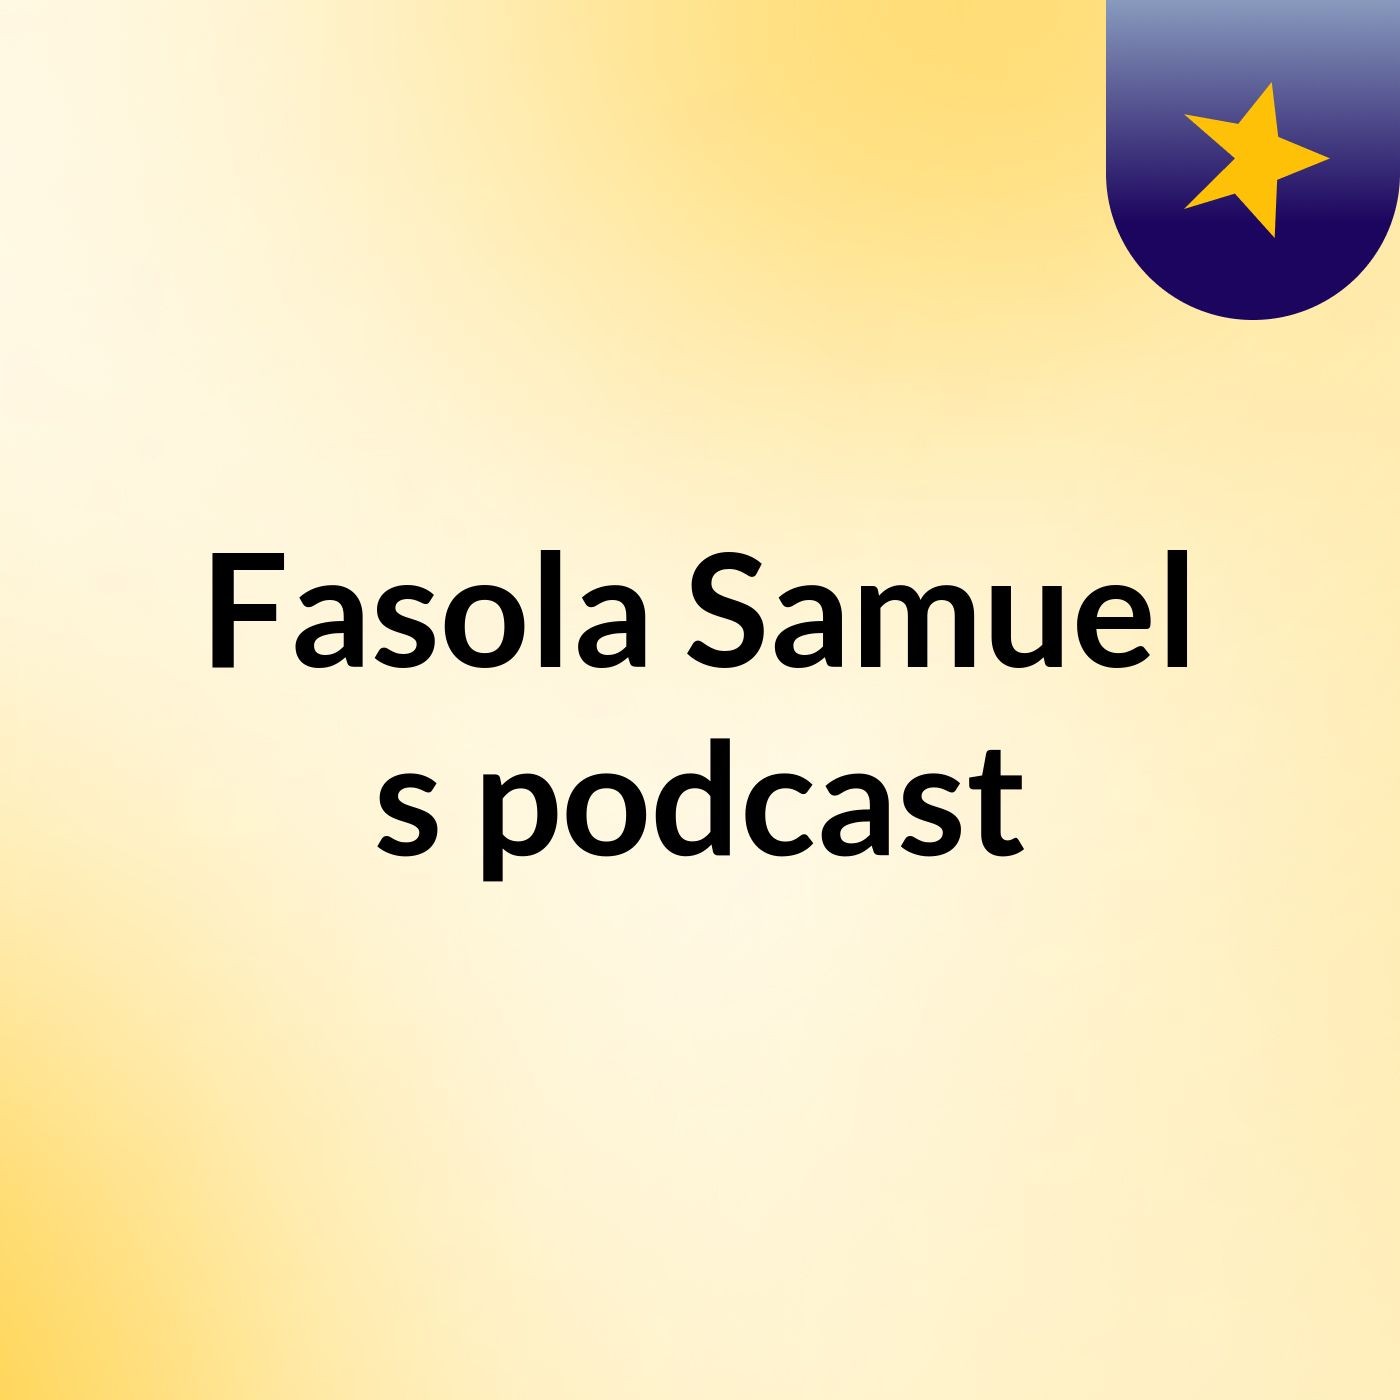 Fasola Samuel's podcast